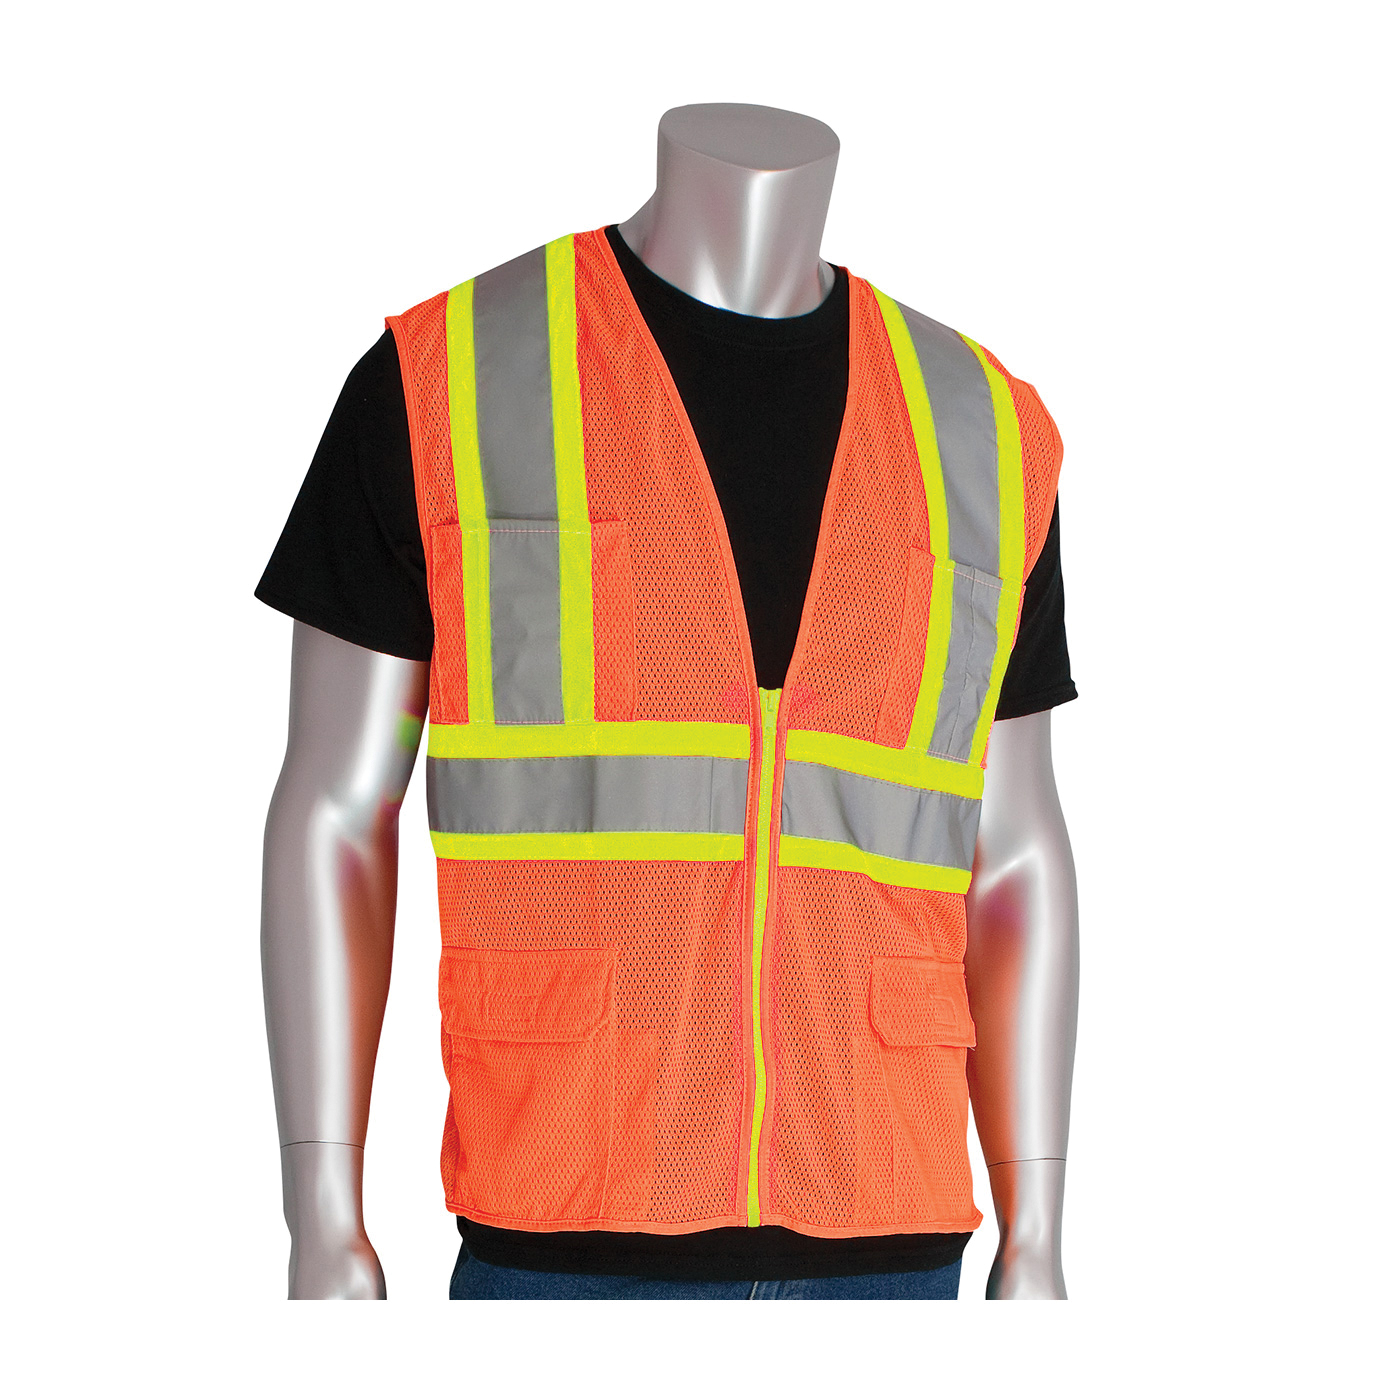 PIP® 302-MAPMOR-5X 2-Tone Premium Surveyor Safety Vest, 5XL, Hi-Viz Orange, Polyester, Zipper Closure, 11 Pockets, ANSI Class: Class 2, Specifications Met: ANSI 107 Type R